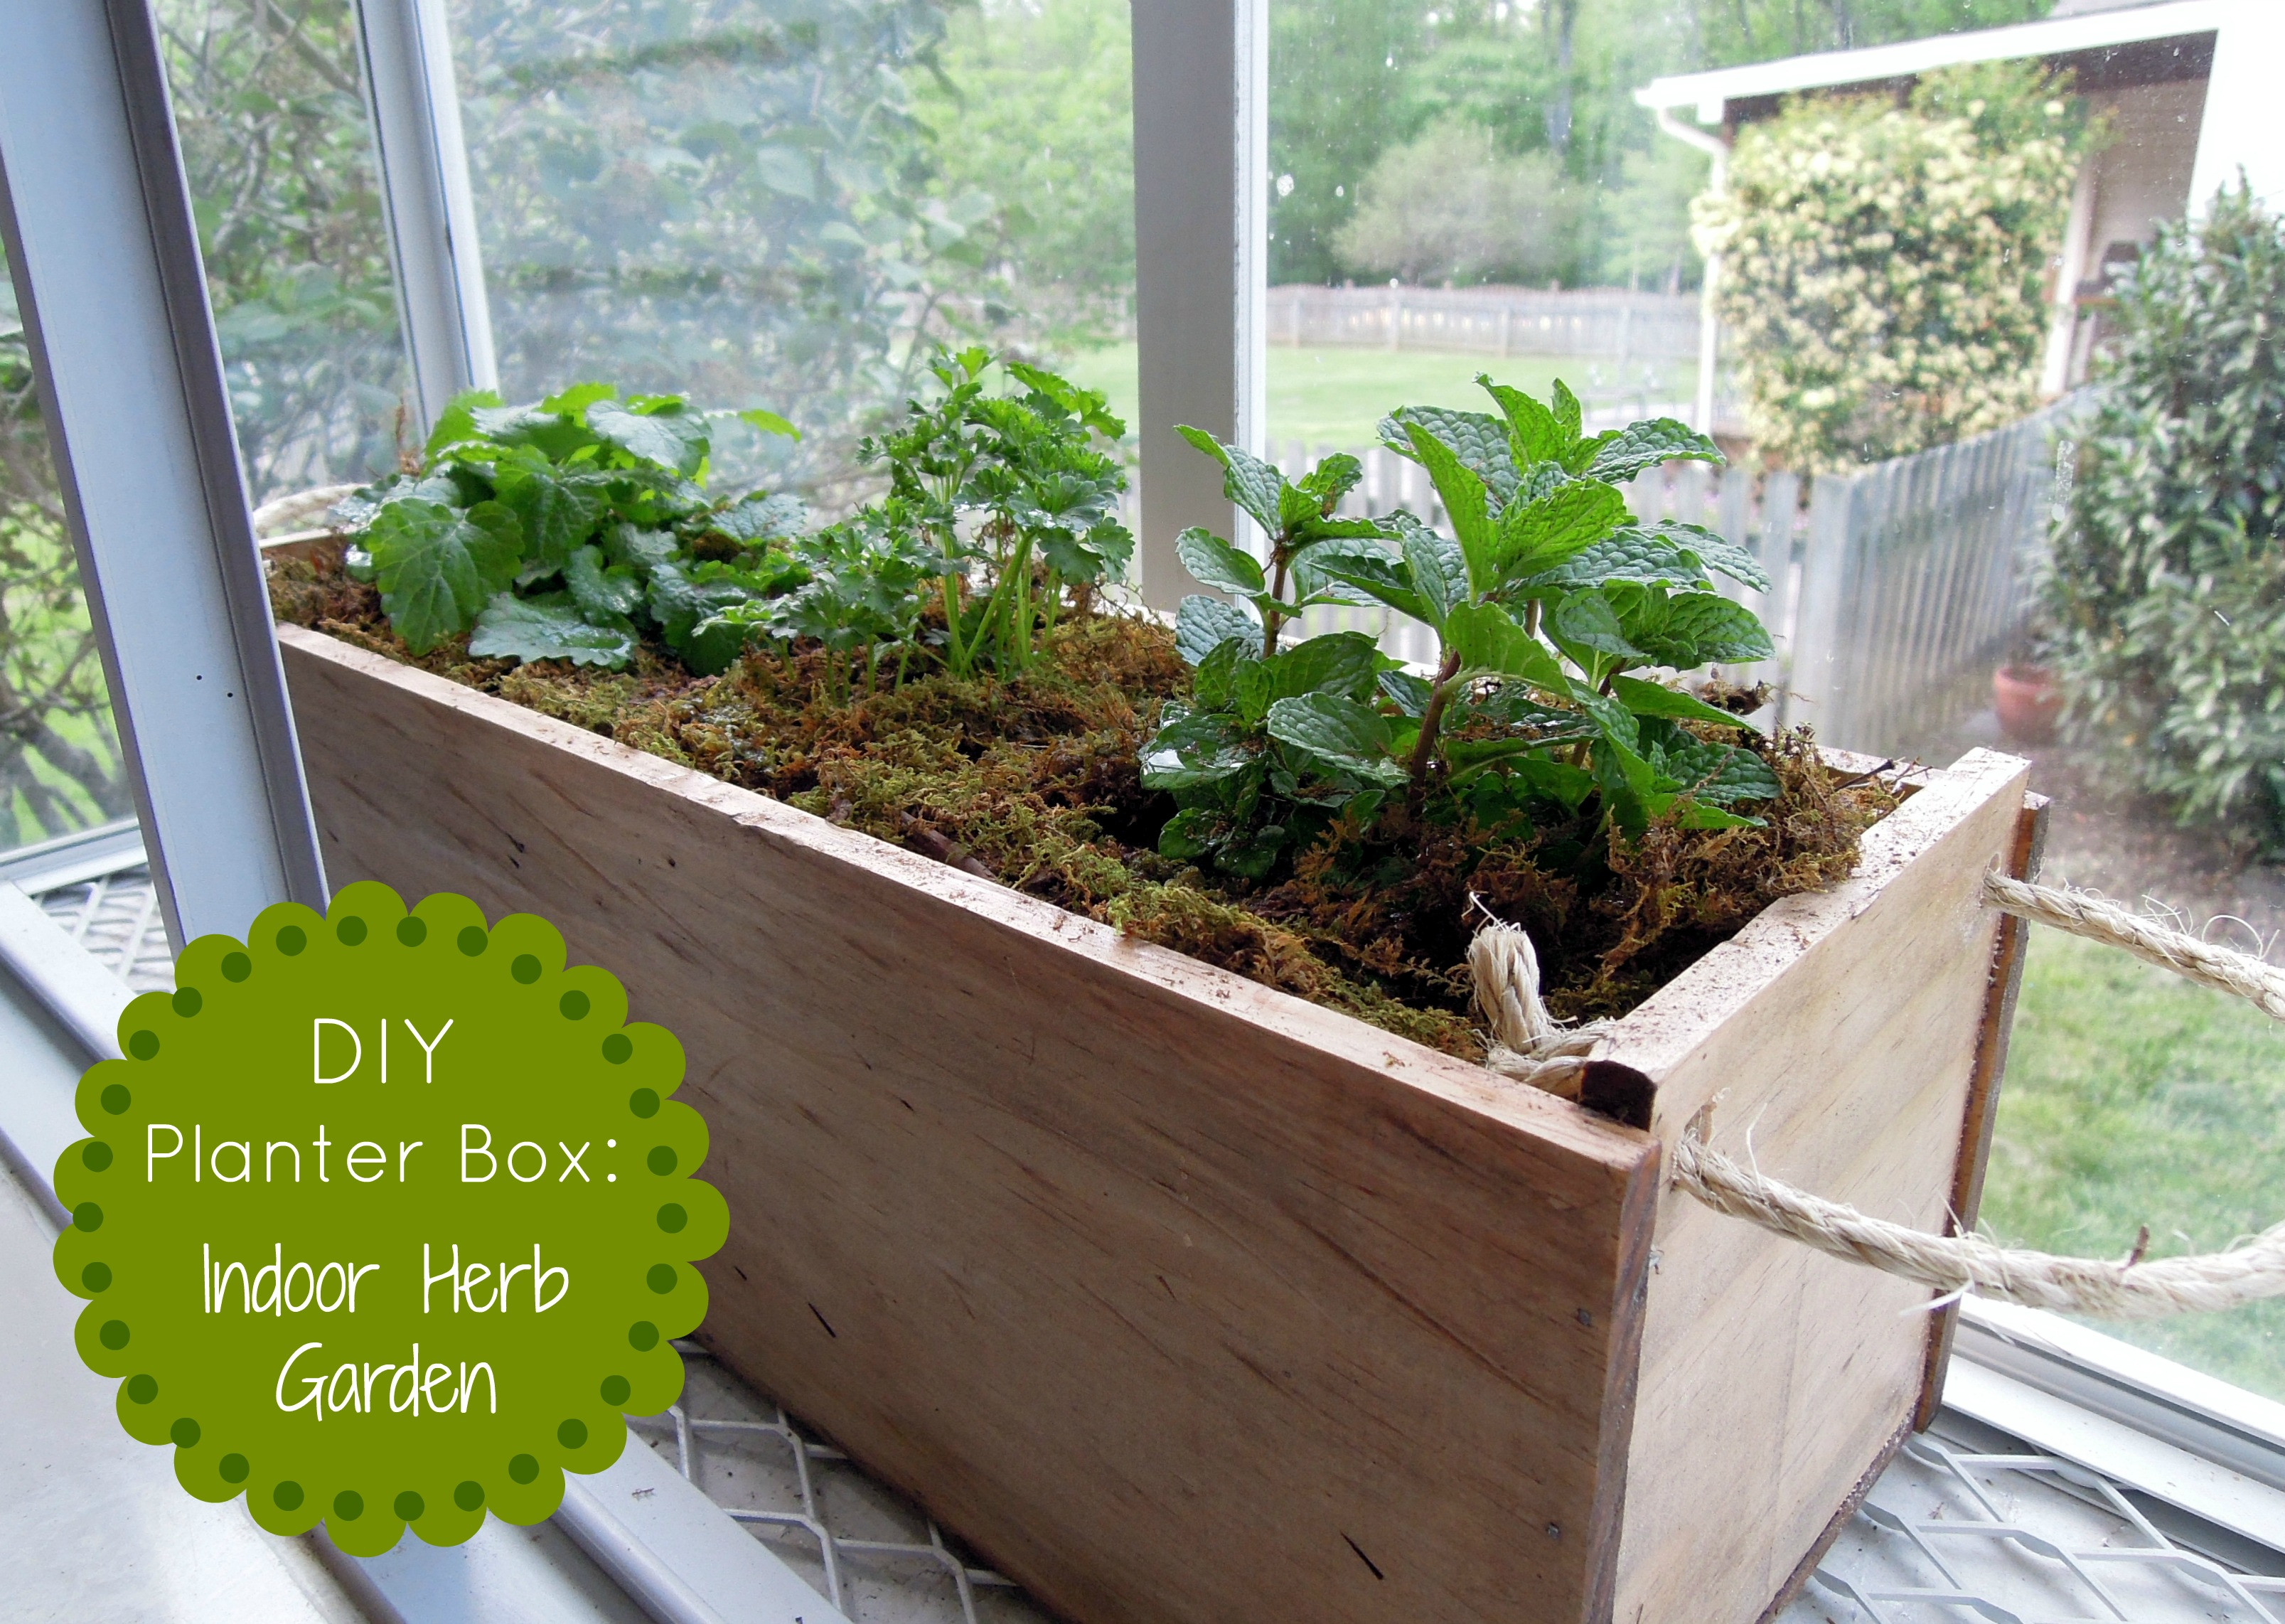 Best ideas about DIY Garden Planters
. Save or Pin DIY Herb Garden Planter Box Now.